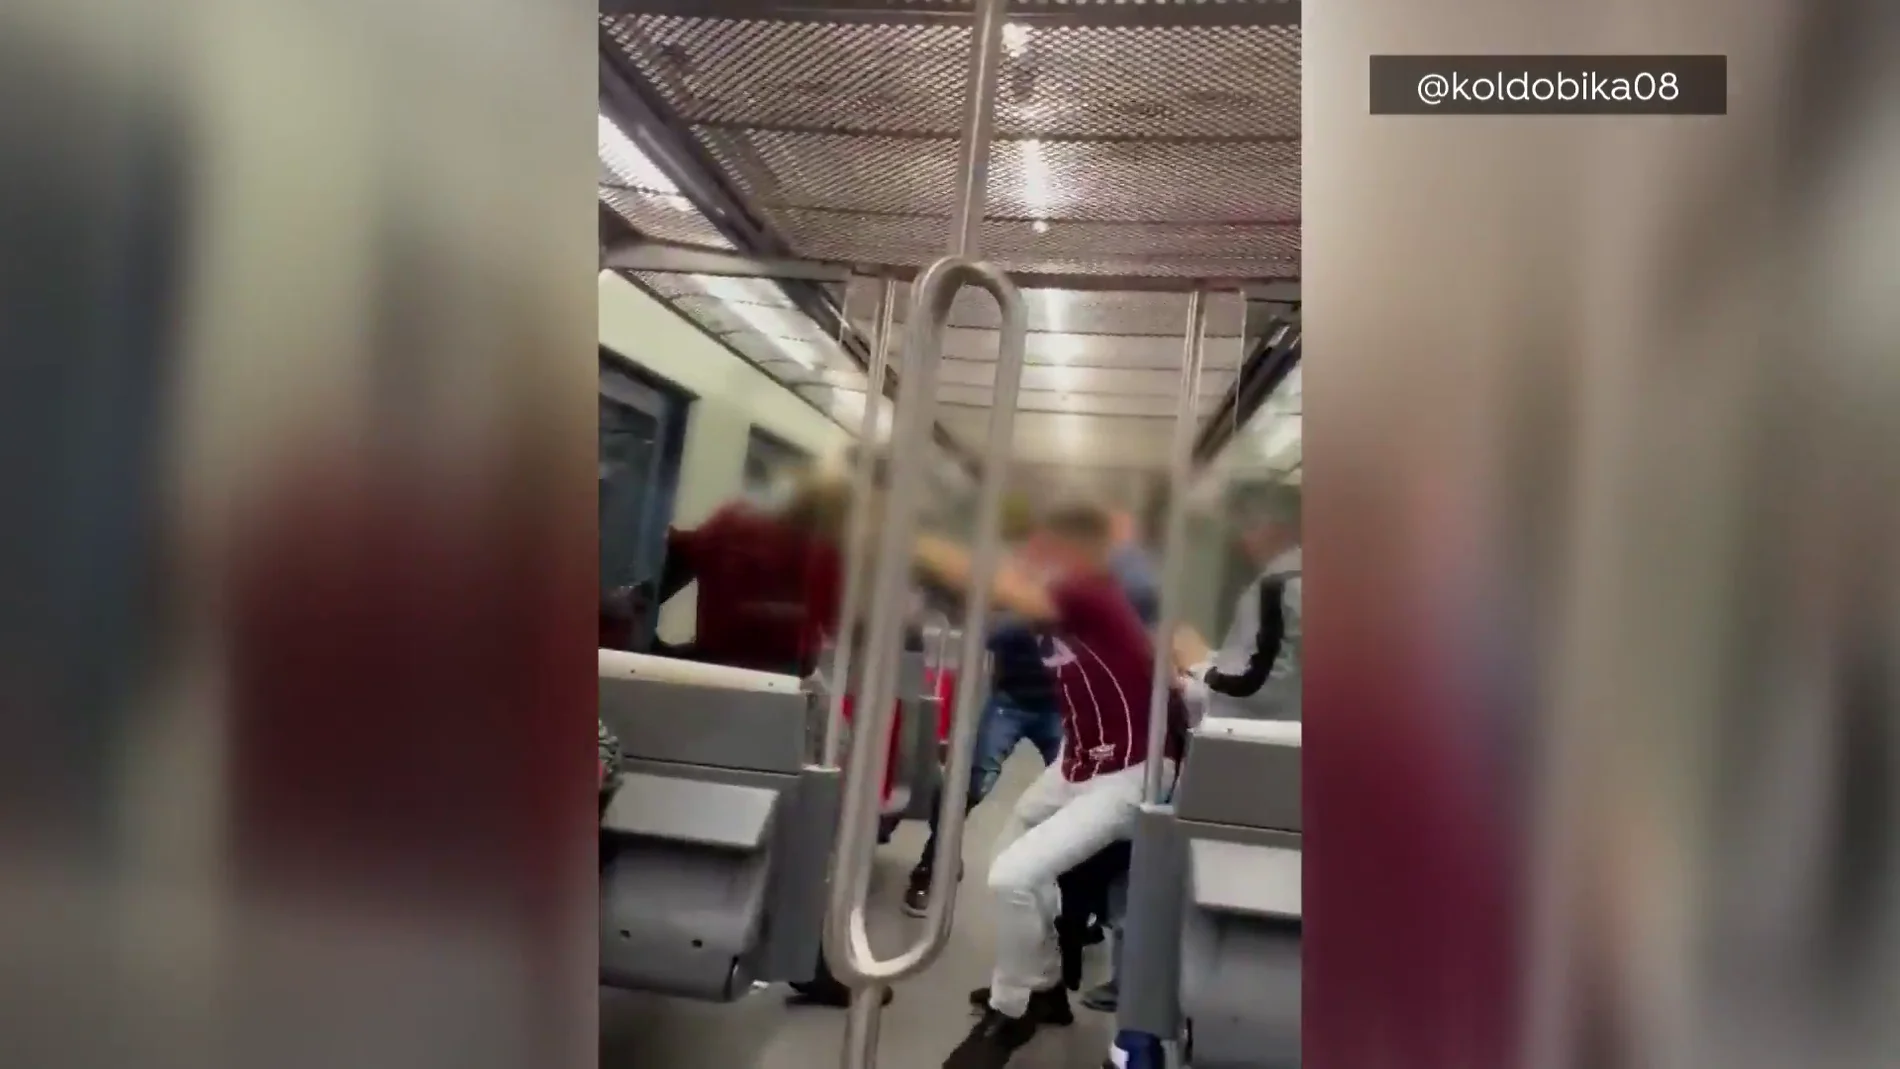 Propinan una brutal paliza a un joven en el metro de Neguri porque "les miró mal"